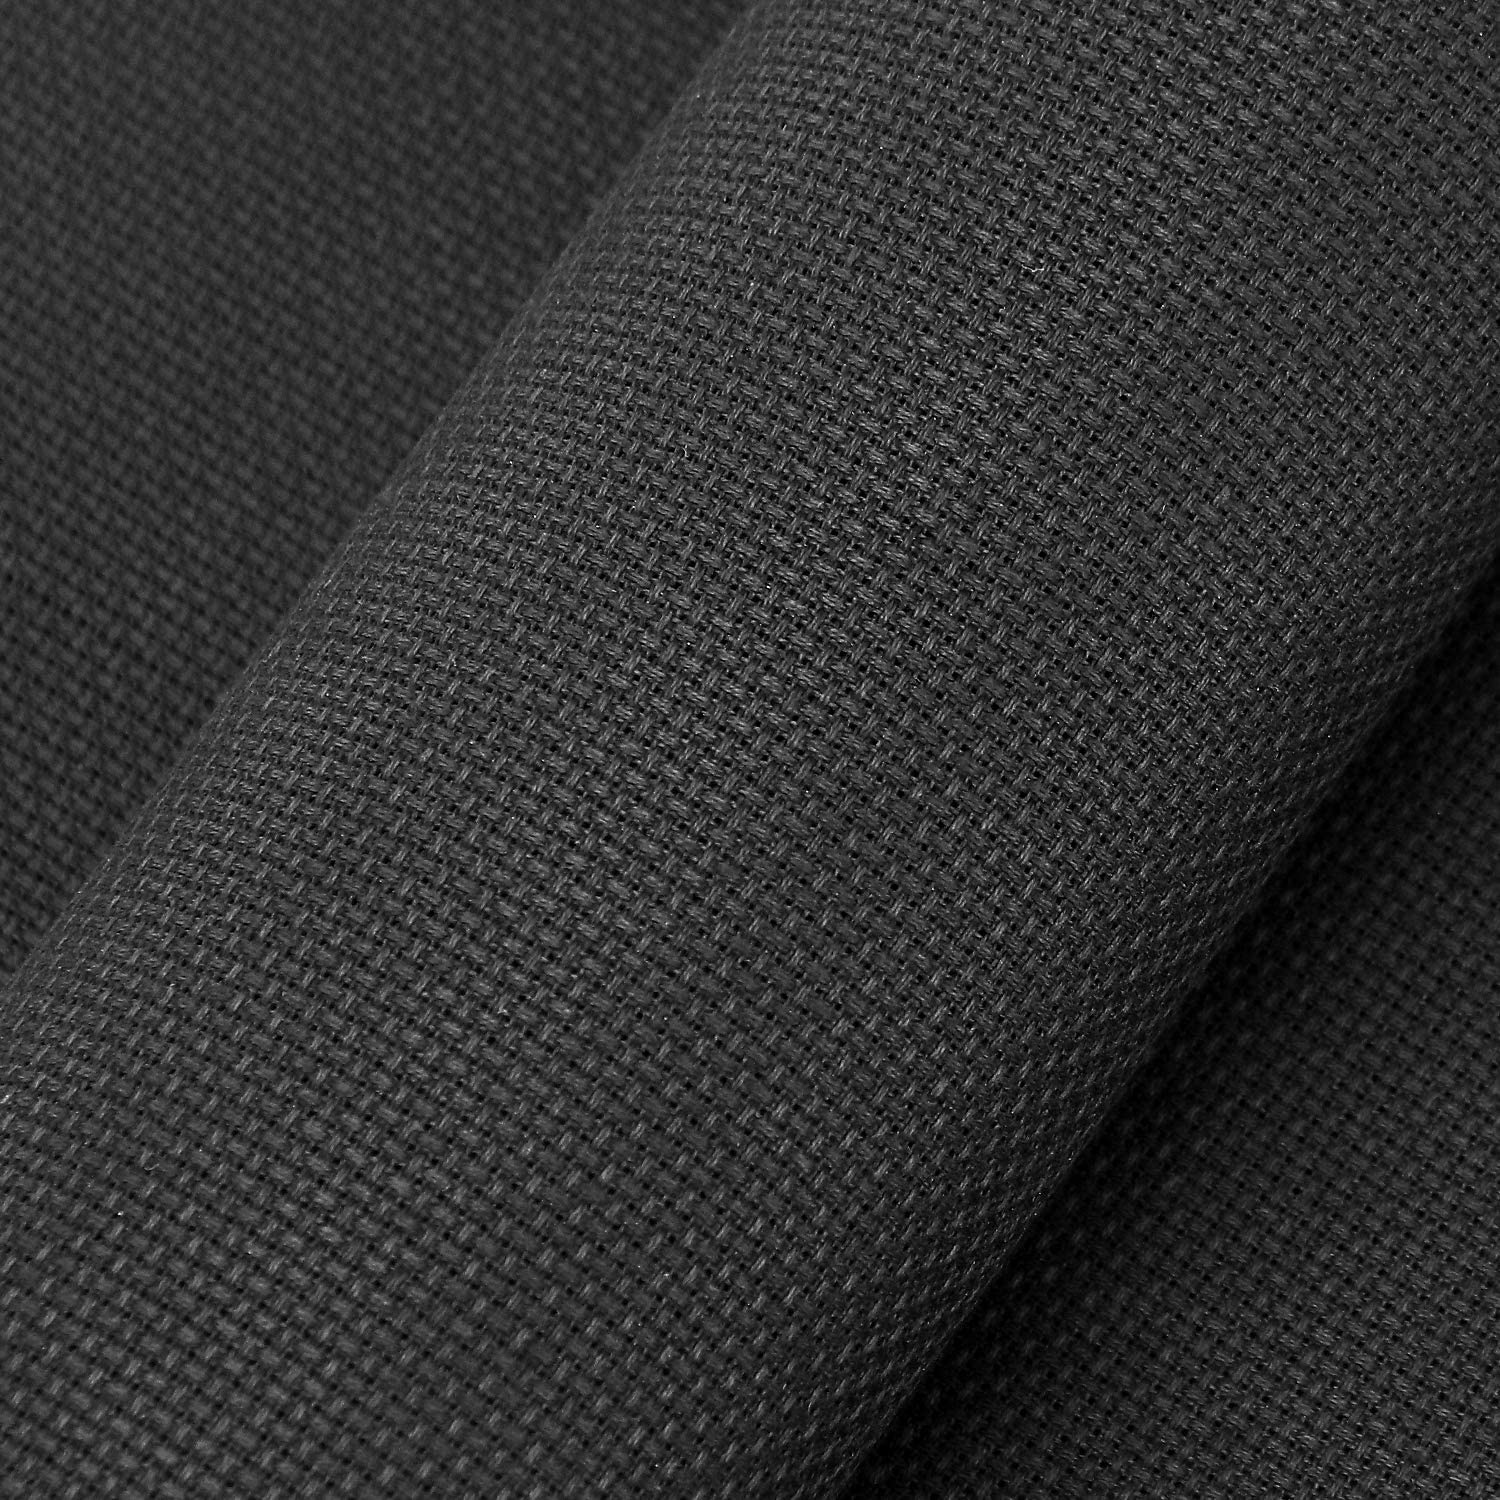 Maydear Cross Stitch Cloth 14 Count Cotton Aida Fabric Needlework DIY 6 Pieces 12×18（inch）-Black(6pcs) - image 2 of 3